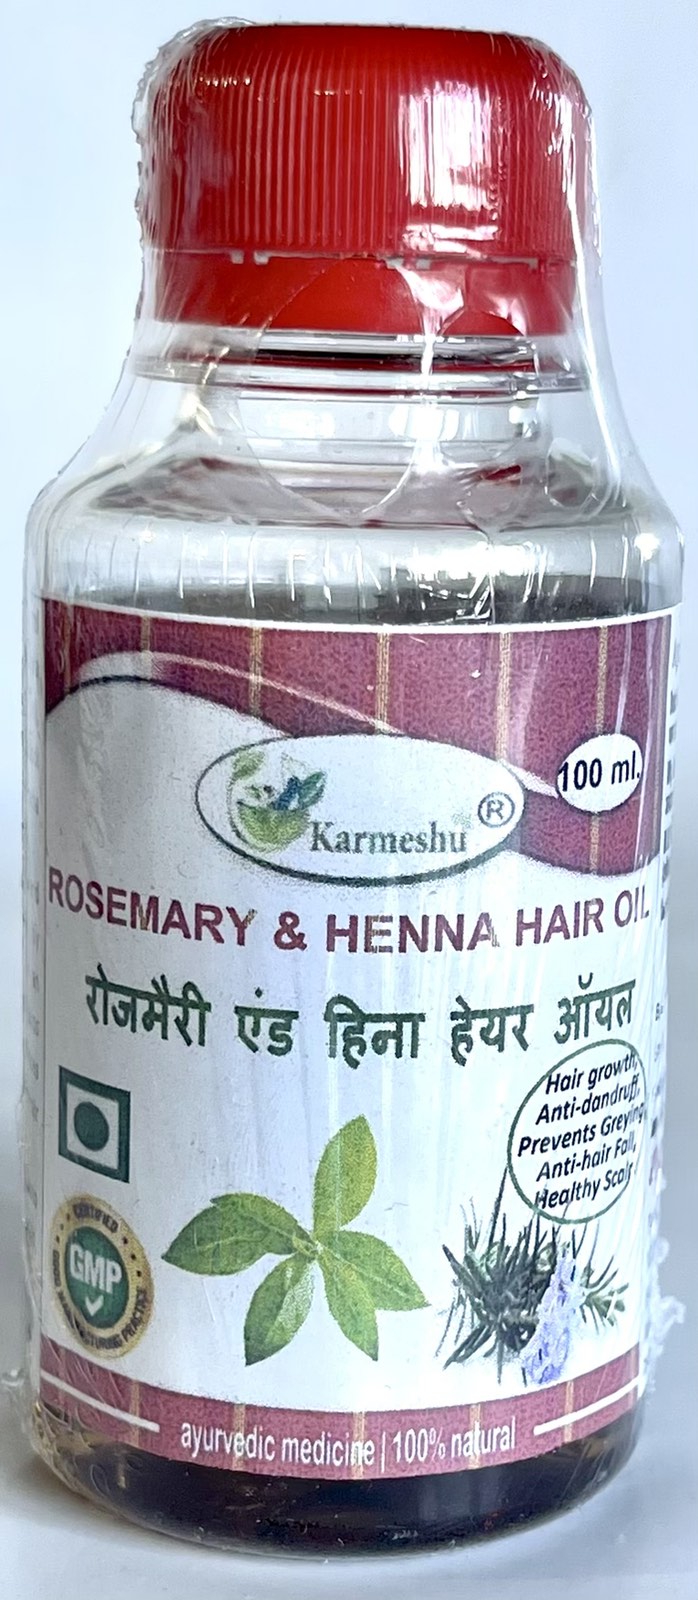 ROSEMARY & HENNA HAIR OIL, Karmeshu (Масло для волос РОЗМАРИН И ХНА, Кармешу), 100 мл.